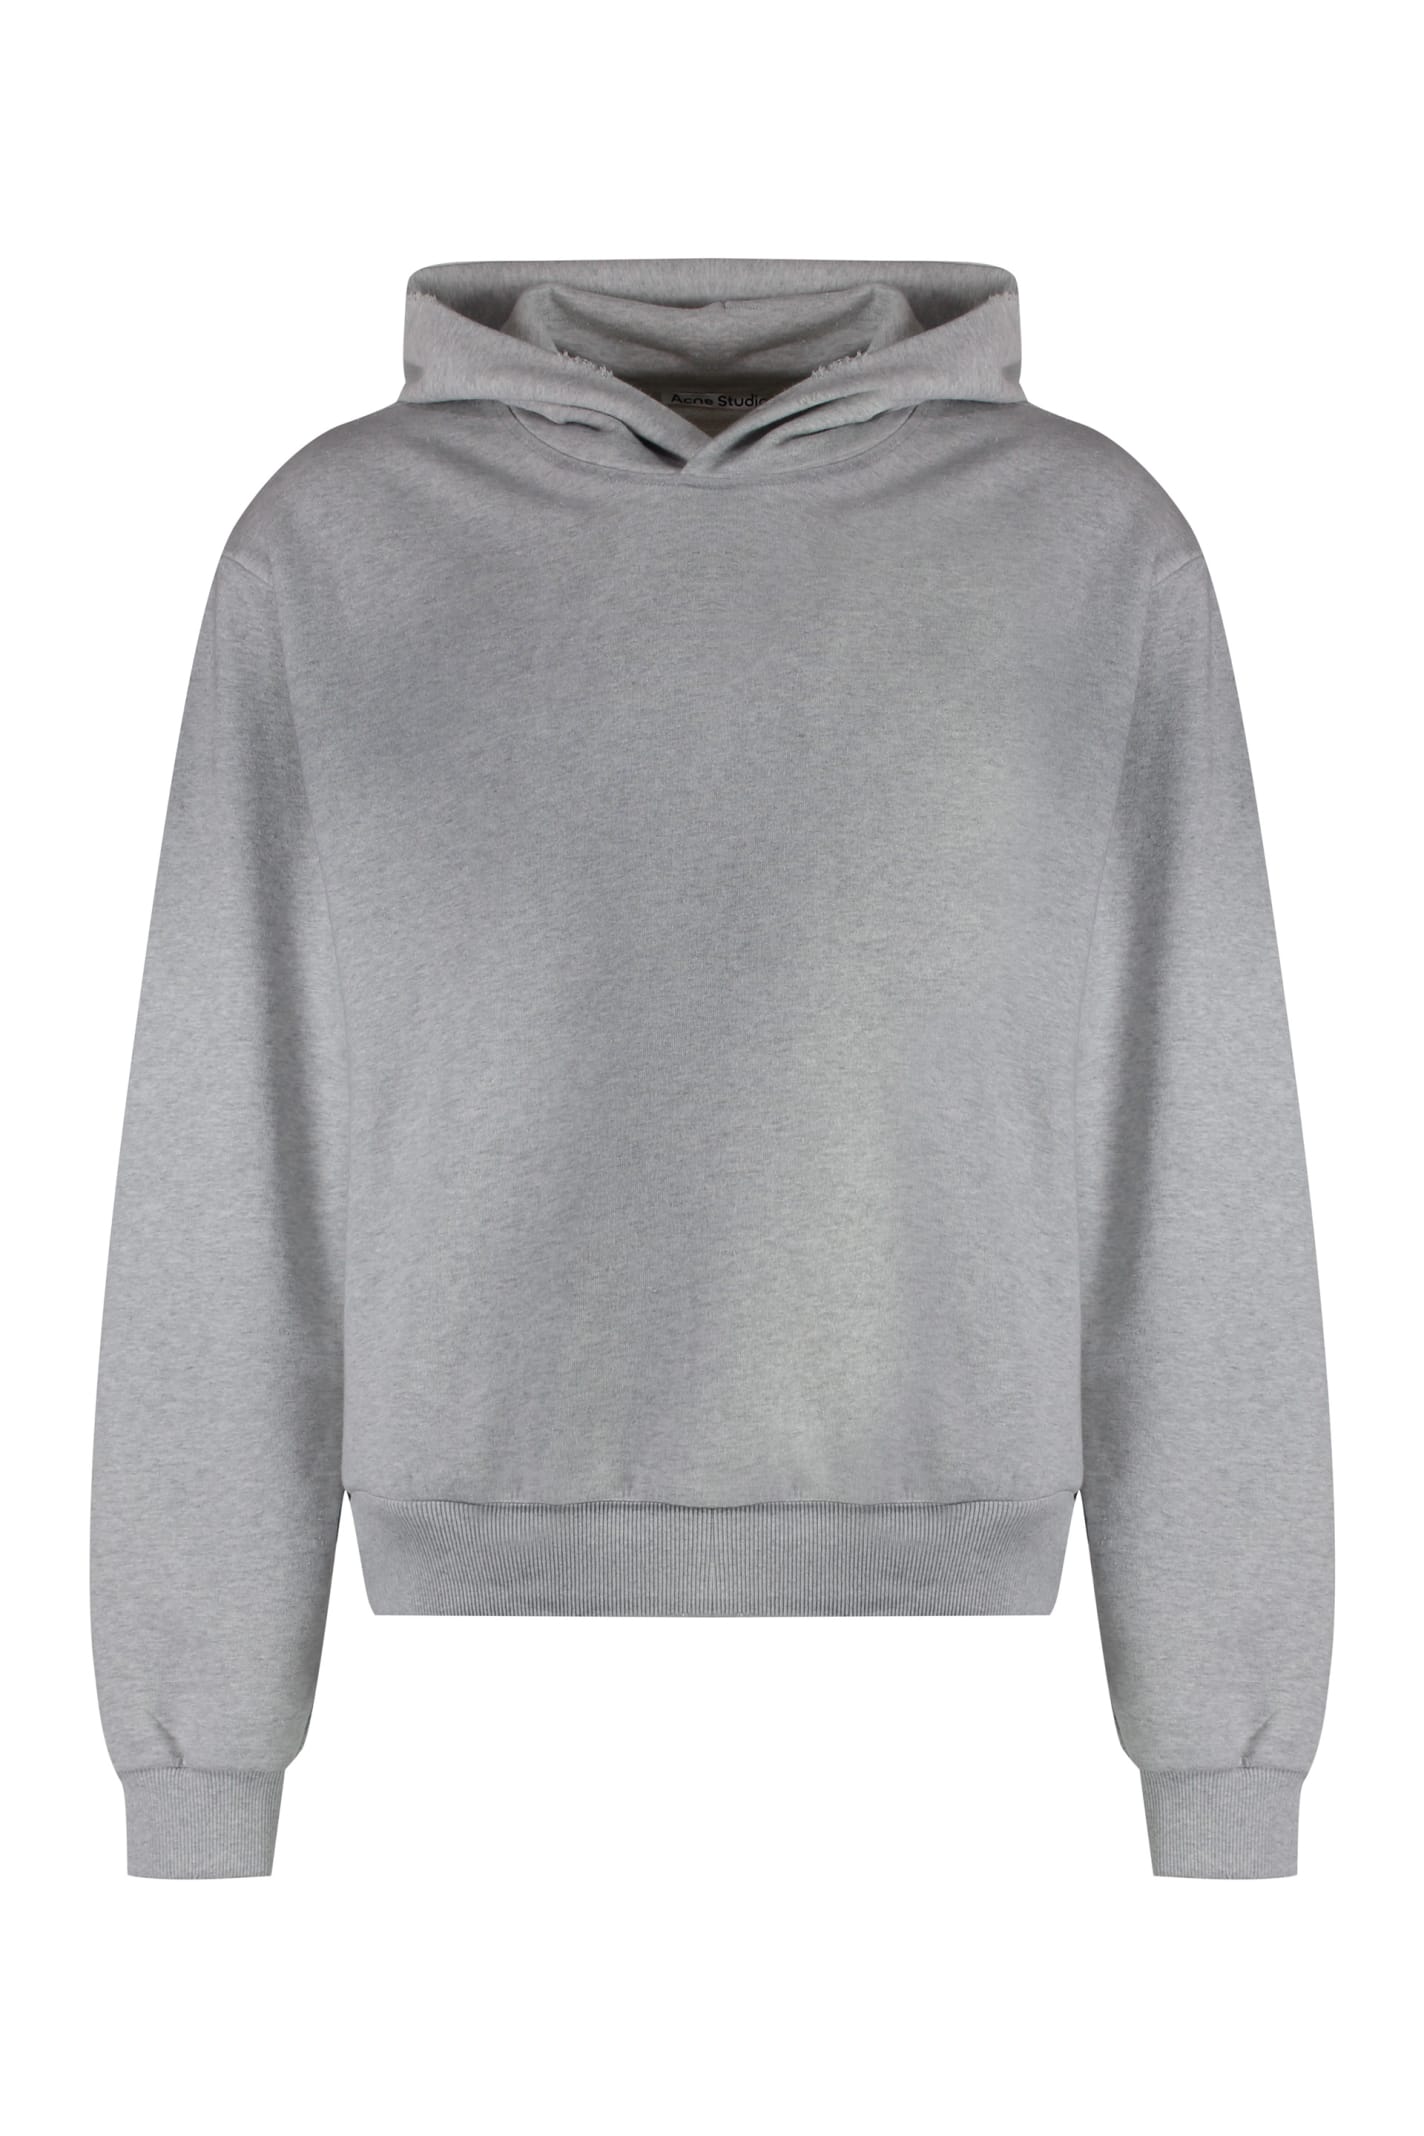 Acne Studios Hooded Sweatshirt In Gray